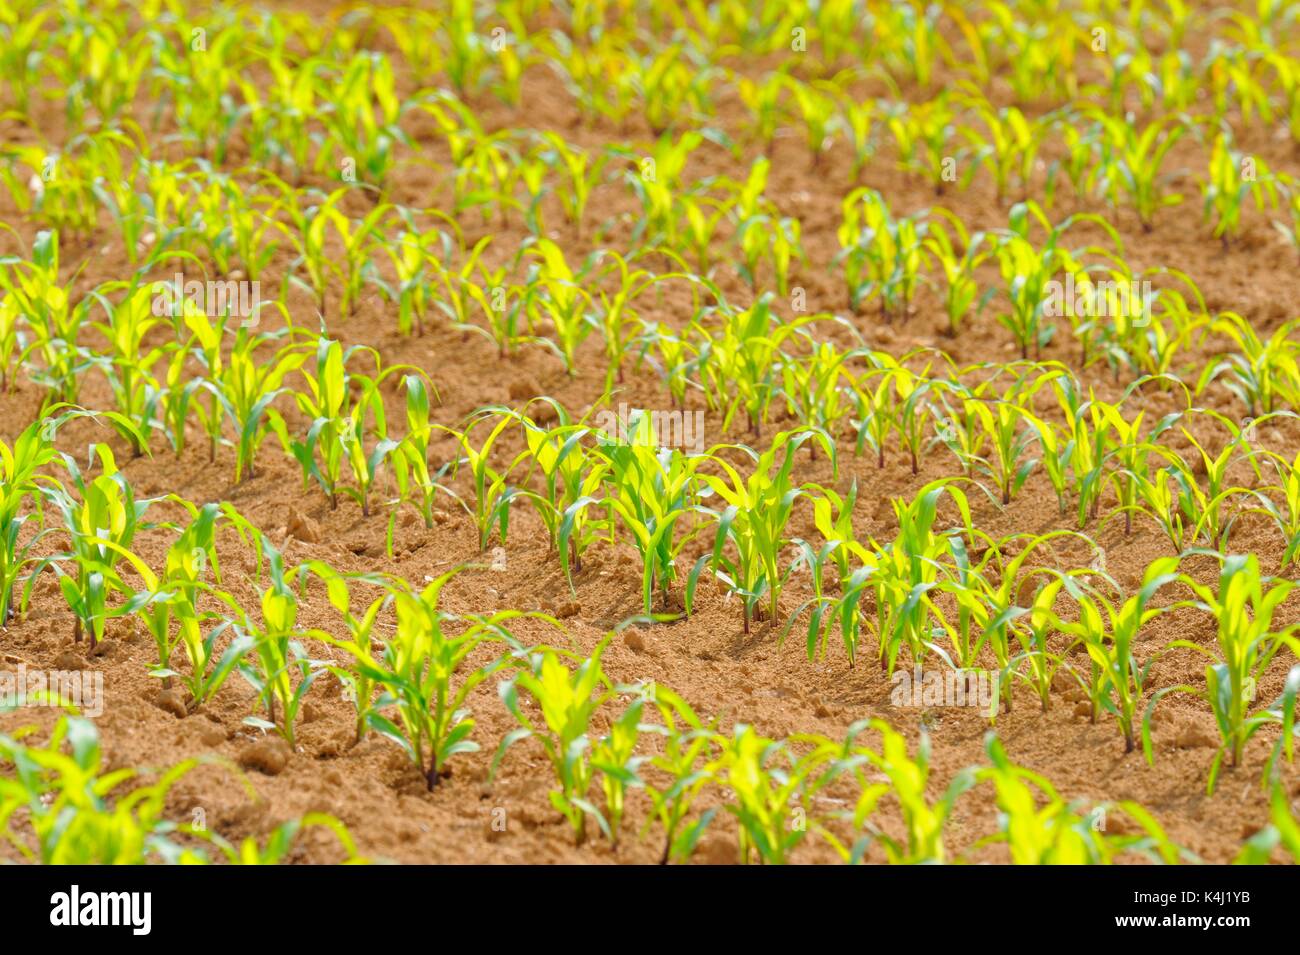 Small Corn plants (Zea mays) in rows on field, Baden-Württemberg, Germany Stock Photo